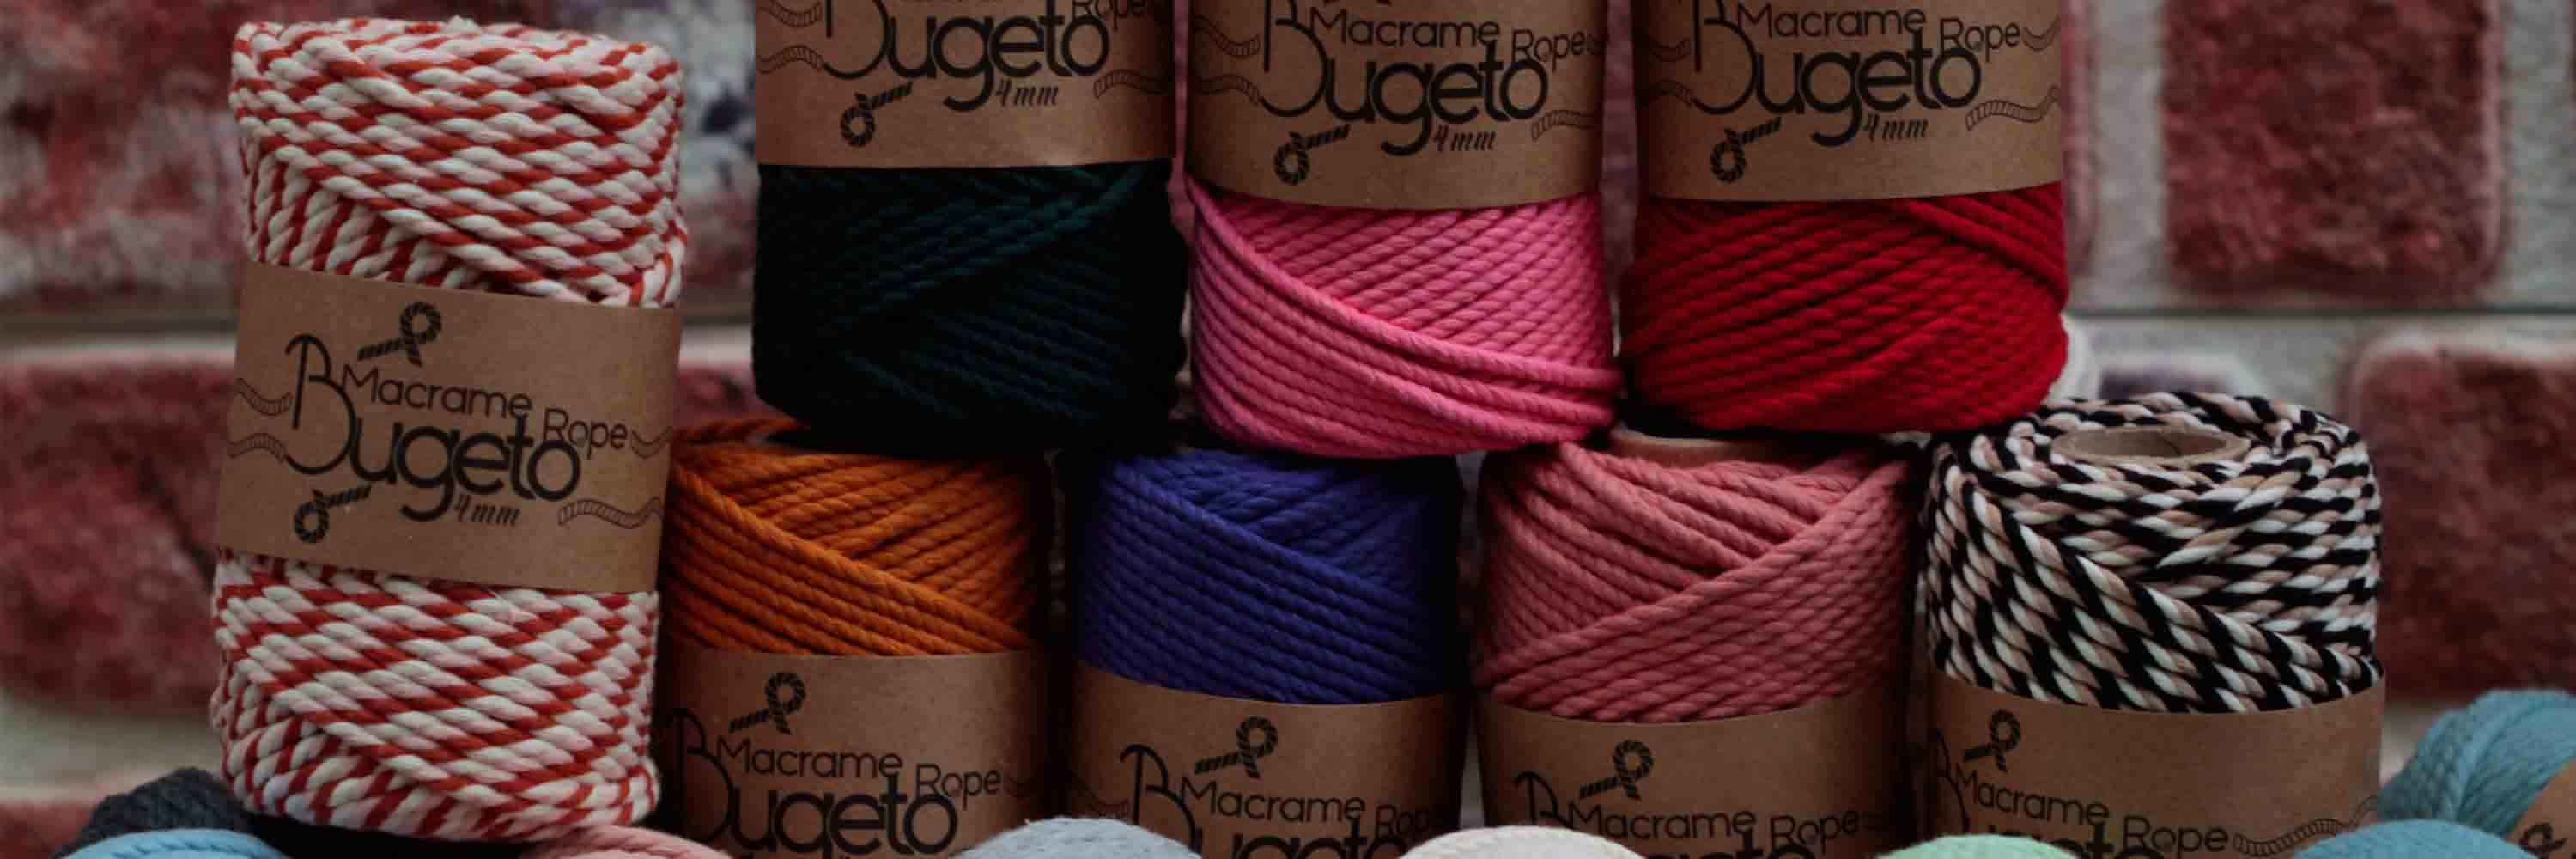 rope twist yarns cotton yarn recycled cotton bugeto yarn